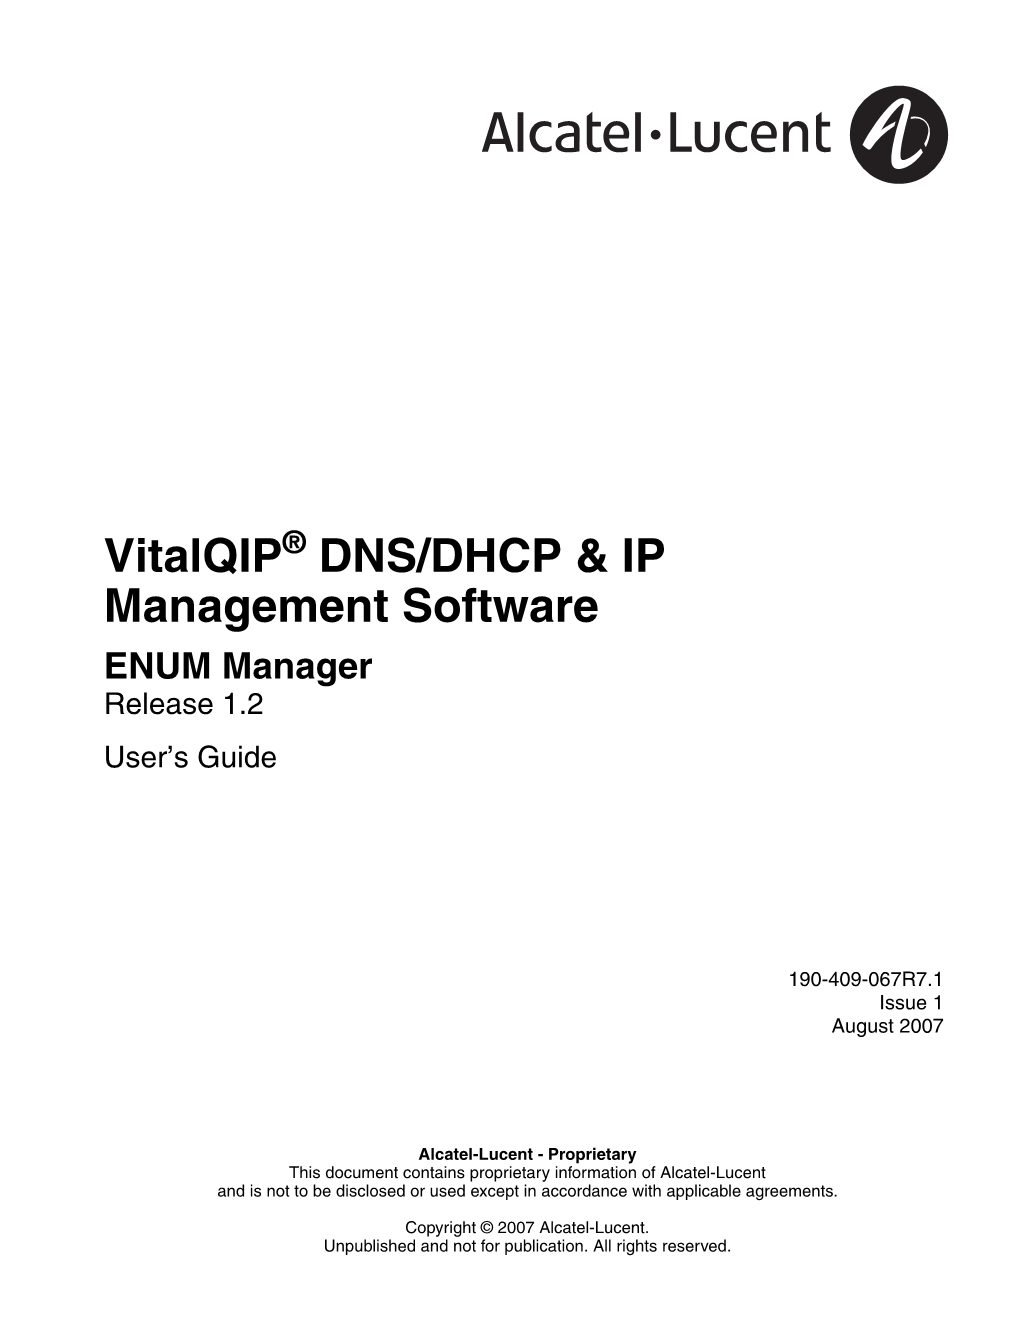 Vitalqip® DNS/DHCP & IP Management Software ENUM